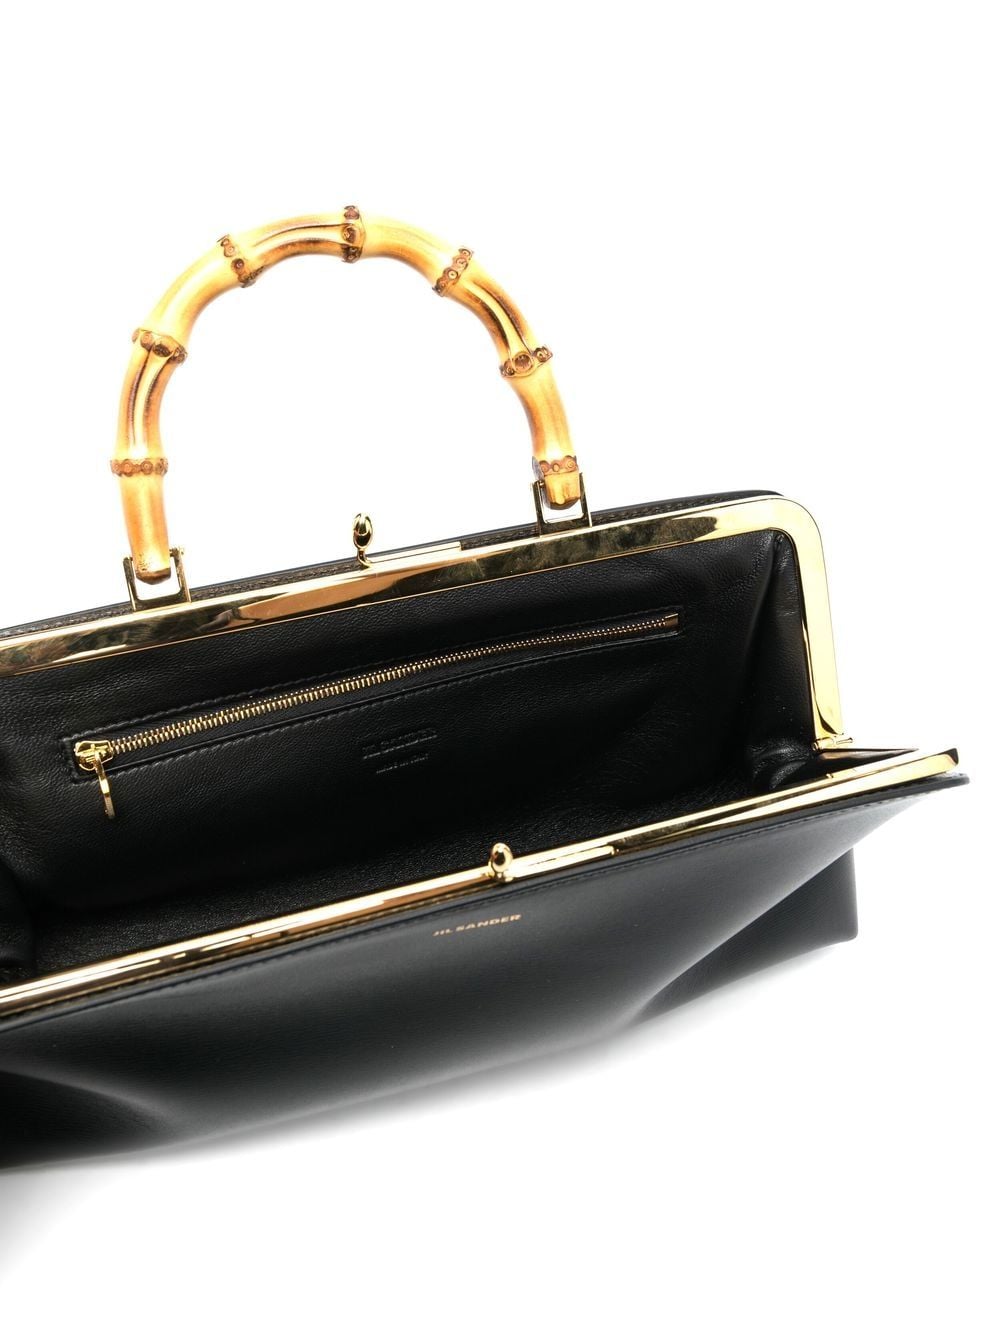 Stylish Black Leather Handbag with Bamboo Handle by JIL SANDER